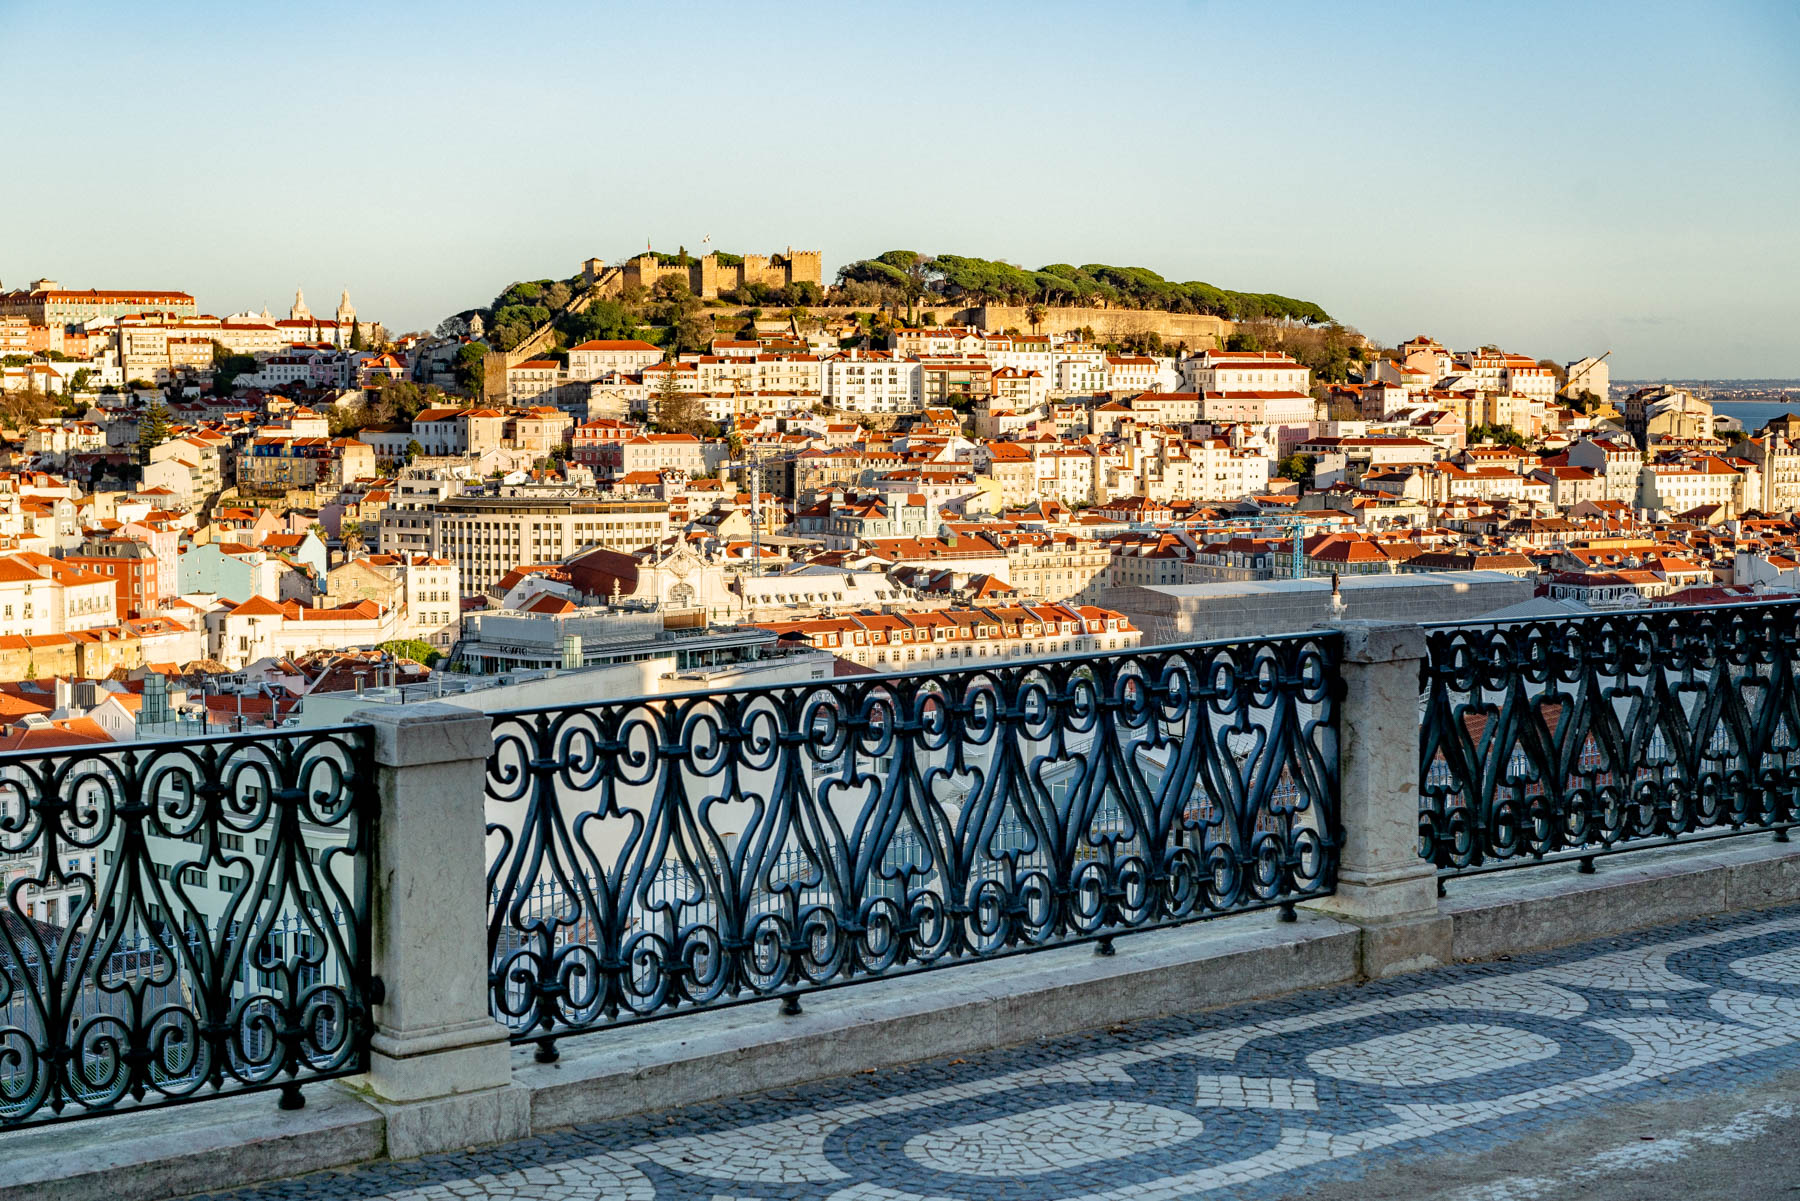 Miradouro de São Pedro de Alcântara 
Best miradouros in Lisbon
